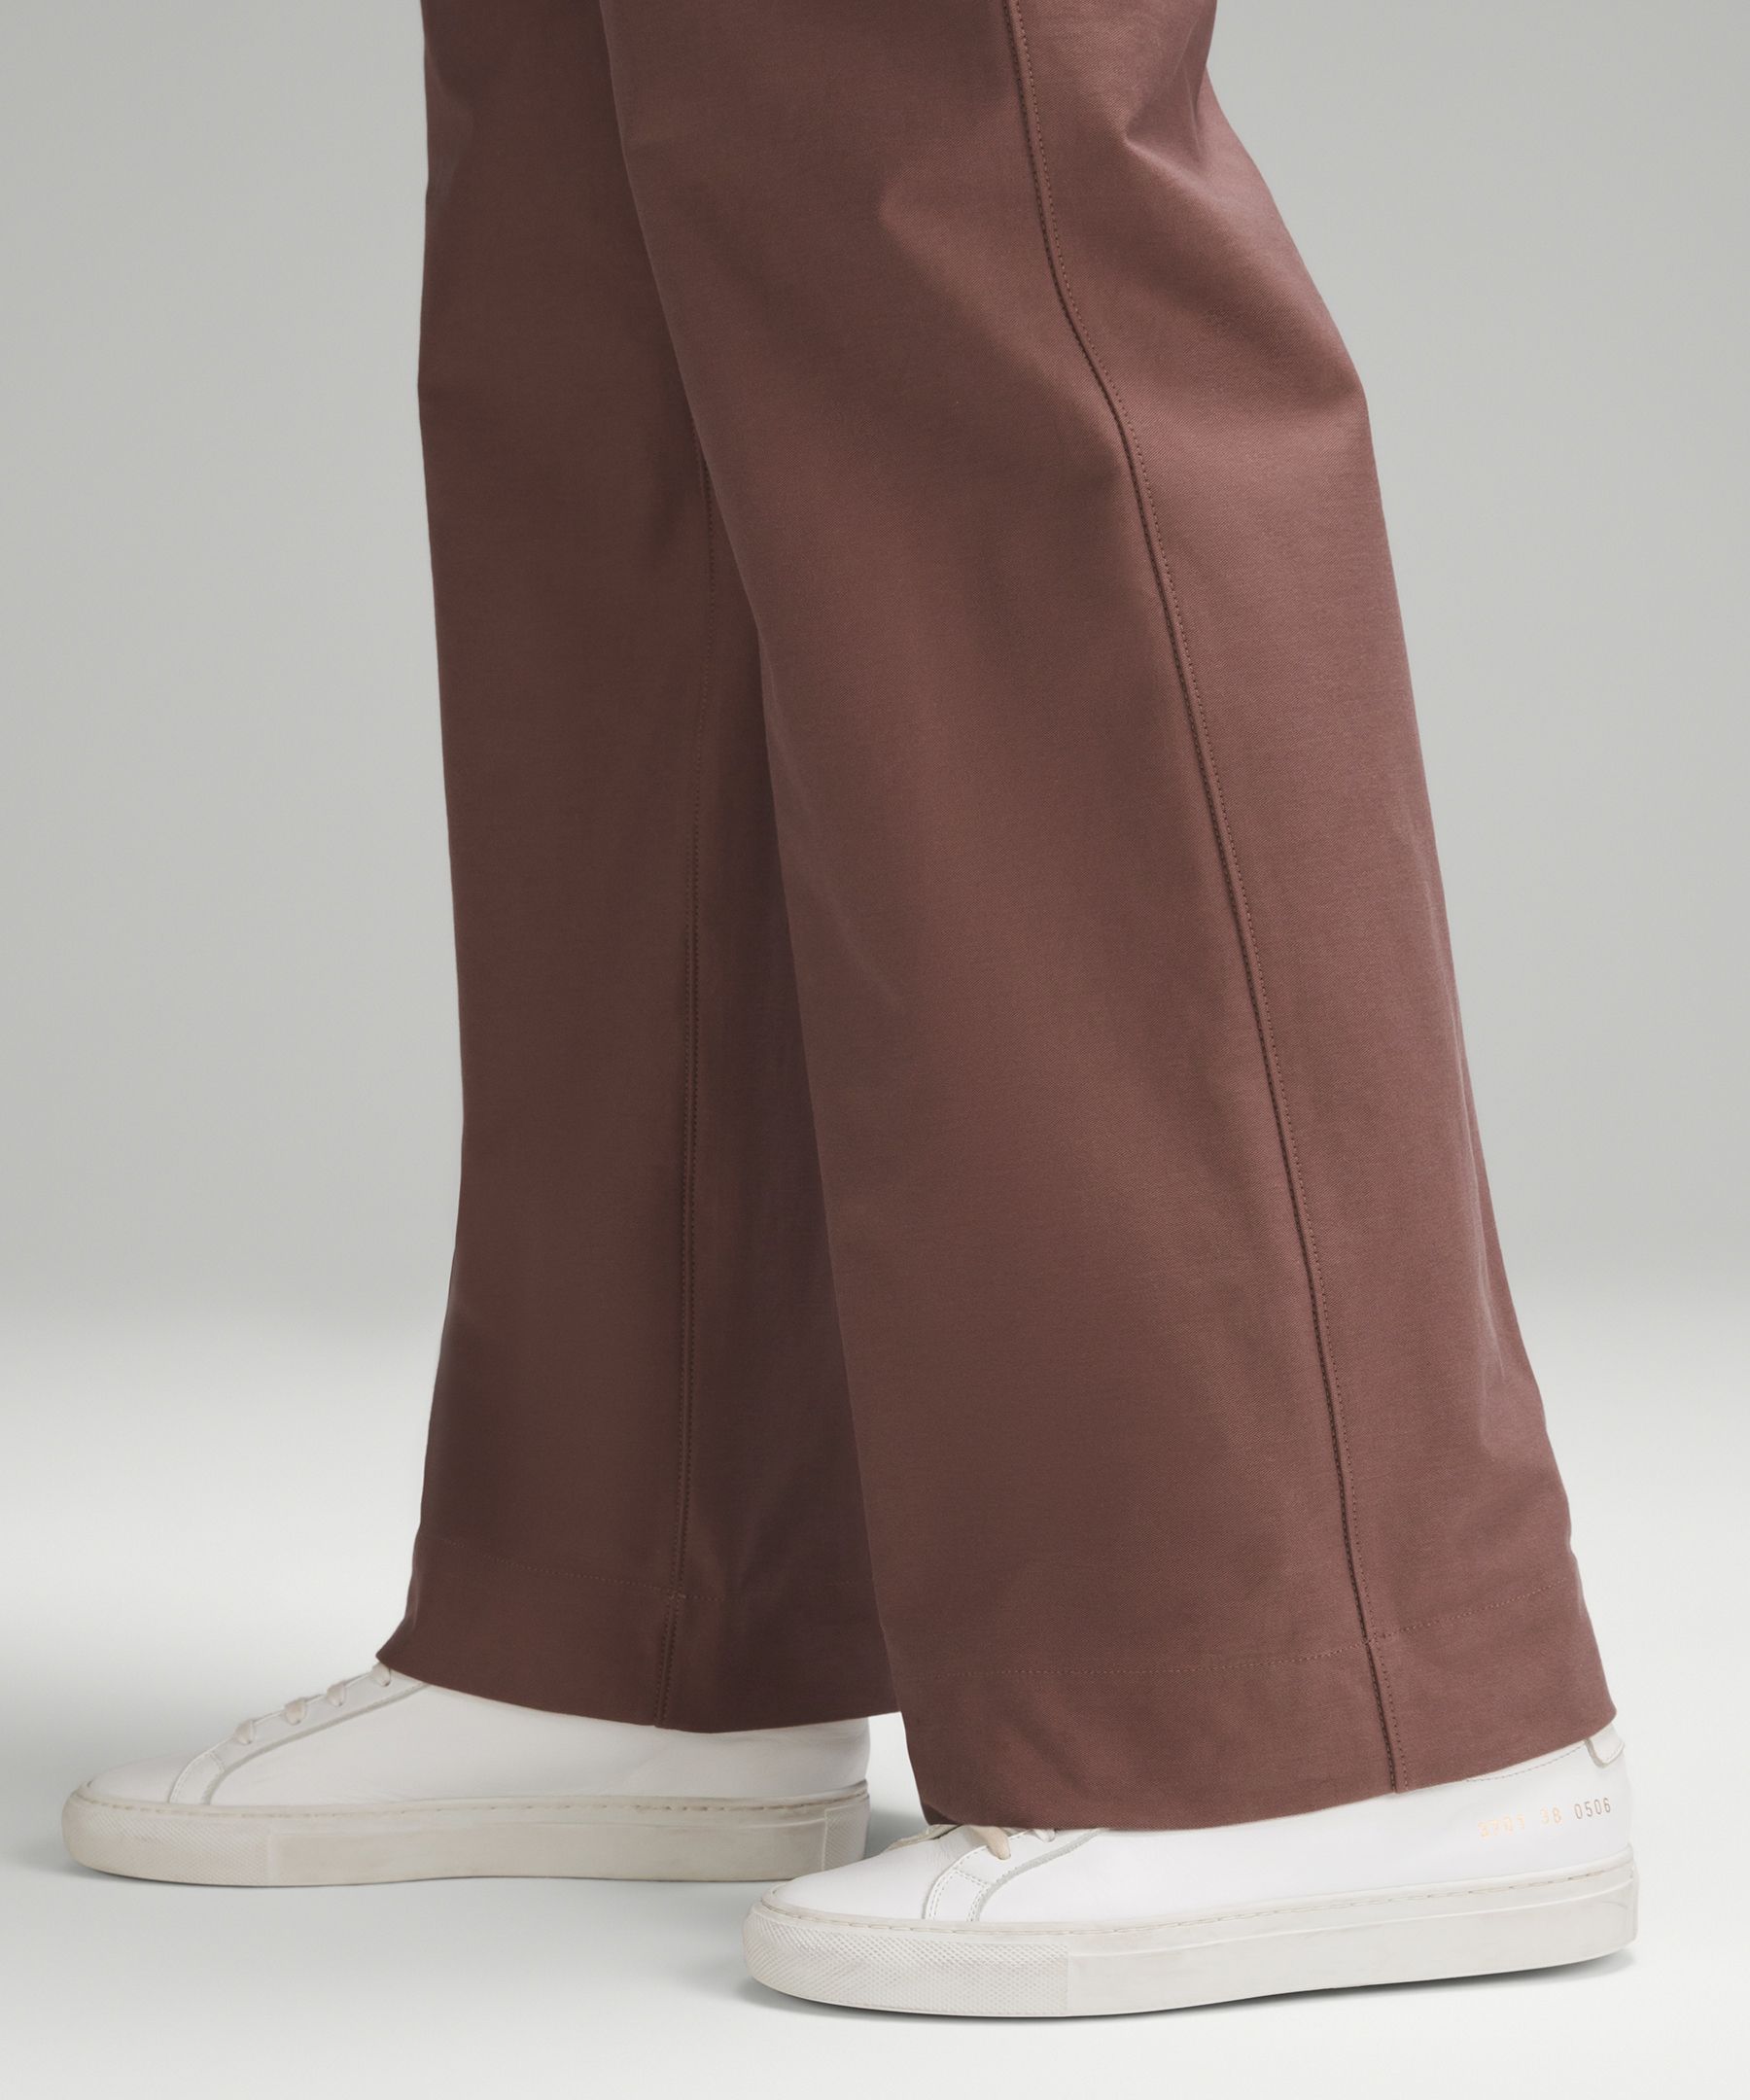 City Sleek 5 Pocket High-Rise Wide-Leg Pants Full Length Light Utilitech -  38% Off!